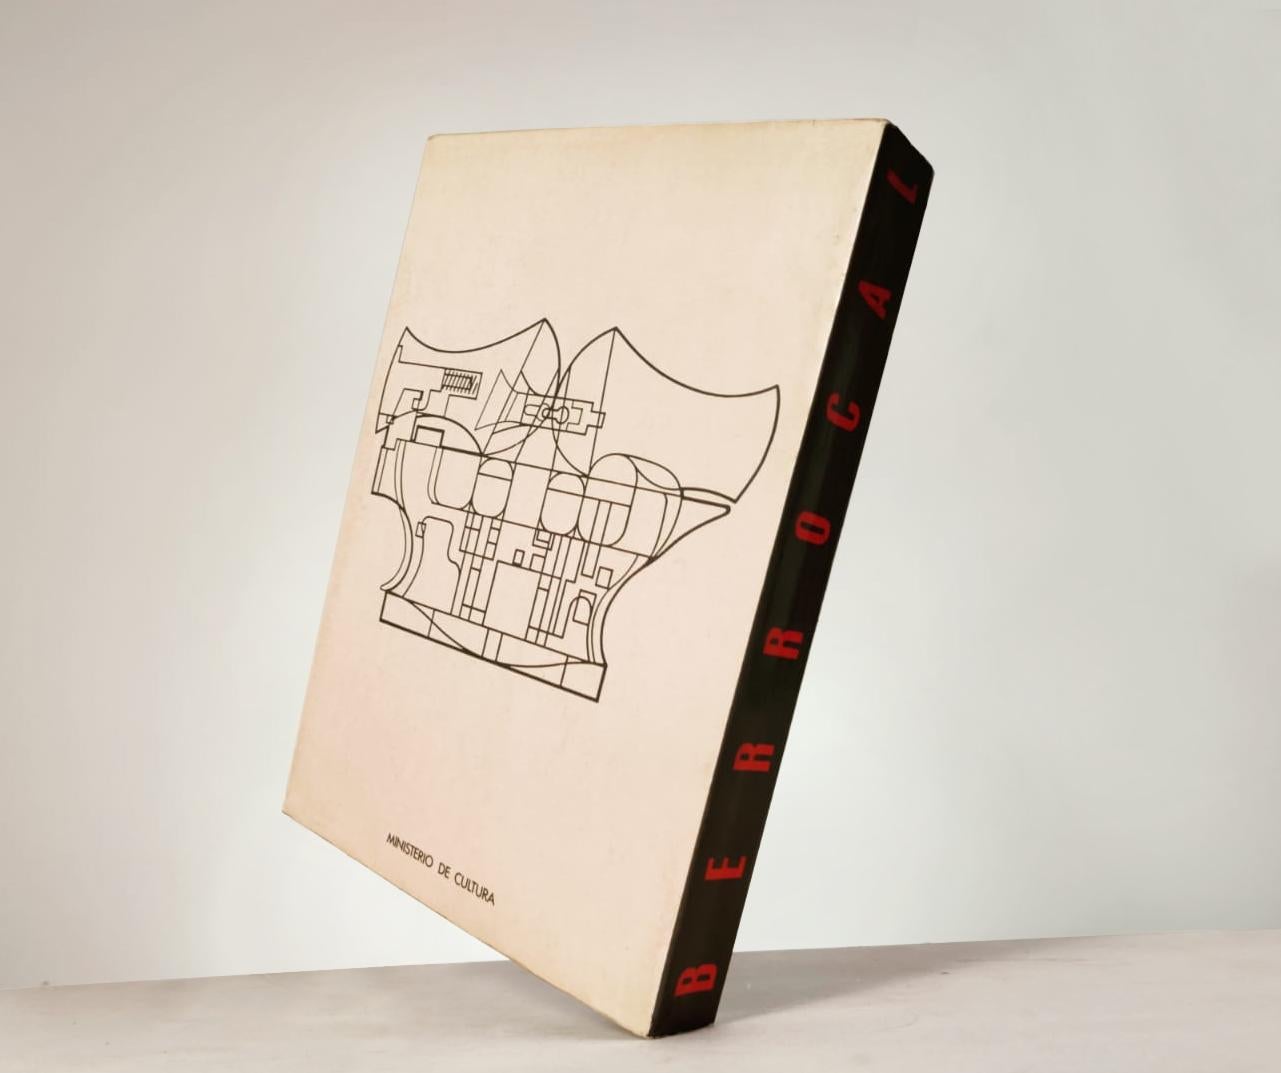 Exclusive Book Antológica Berrocal 1955- 84 Sculptures & Work of Miguel Berrocal In Good Condition For Sale In Benalmadena, ES